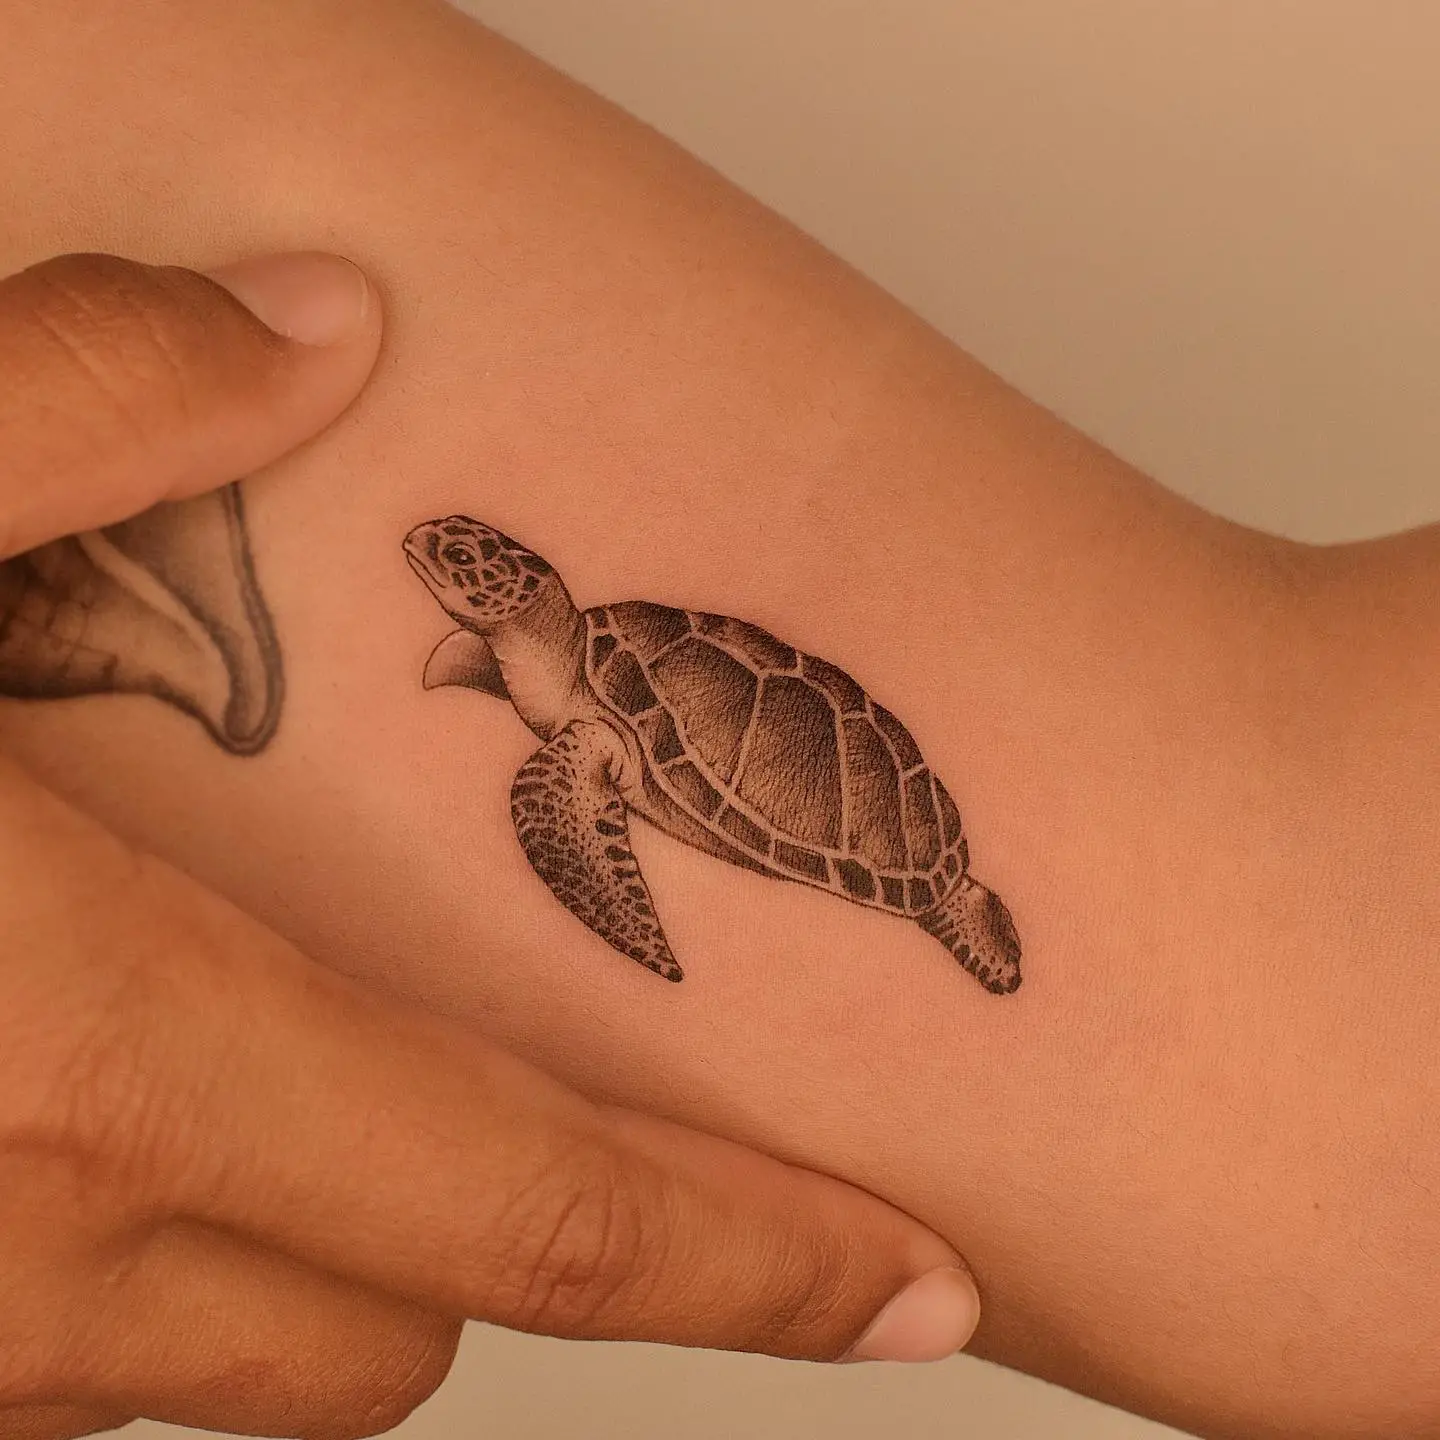 Realistic turtle tattoo by tattooer jina